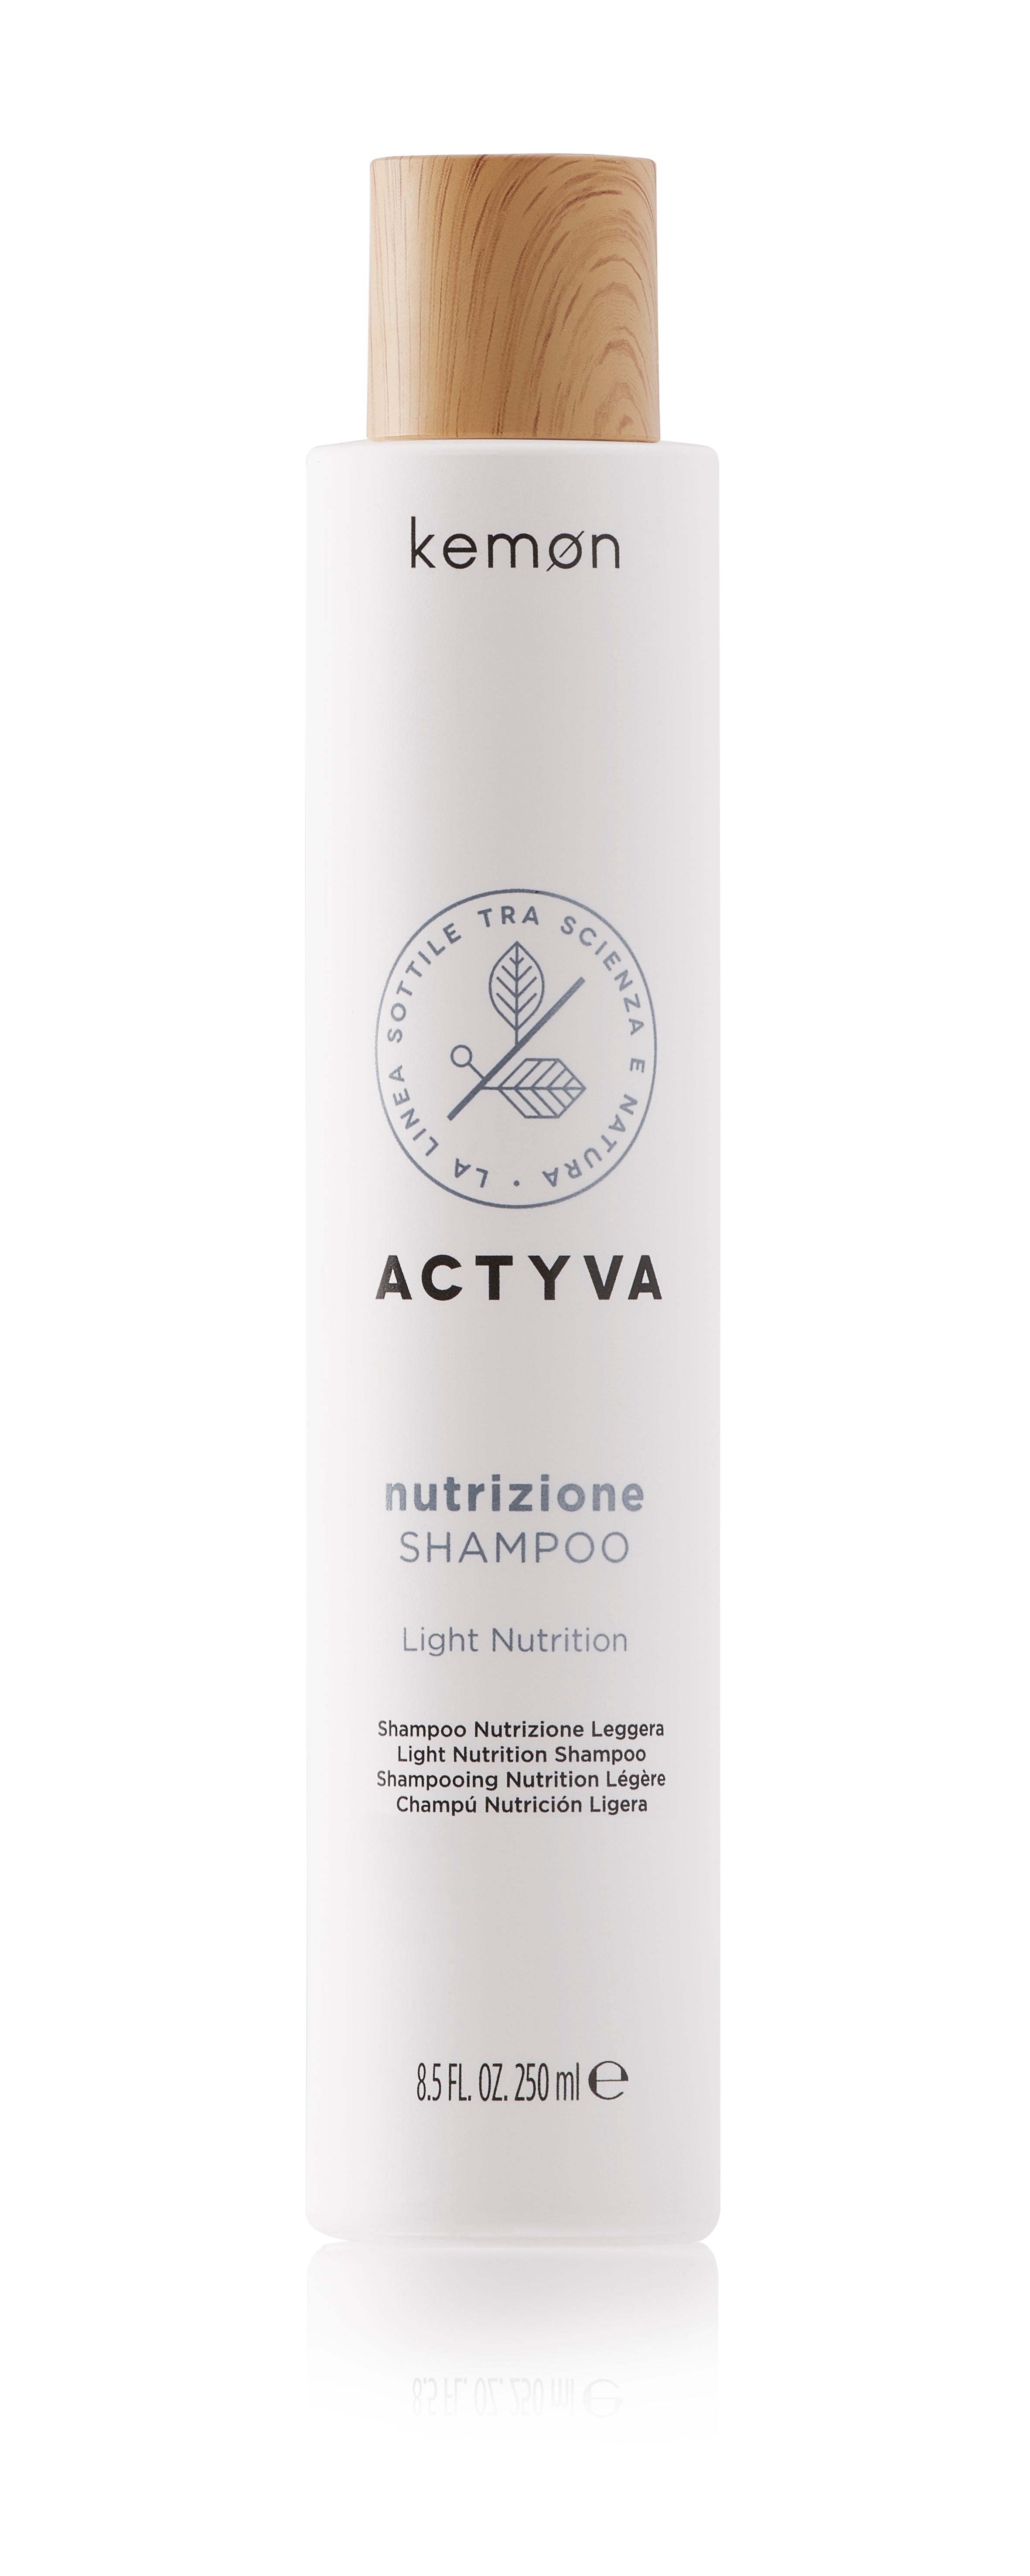 Kemon Actyva NUTRIZIONE Shampoo 250ml